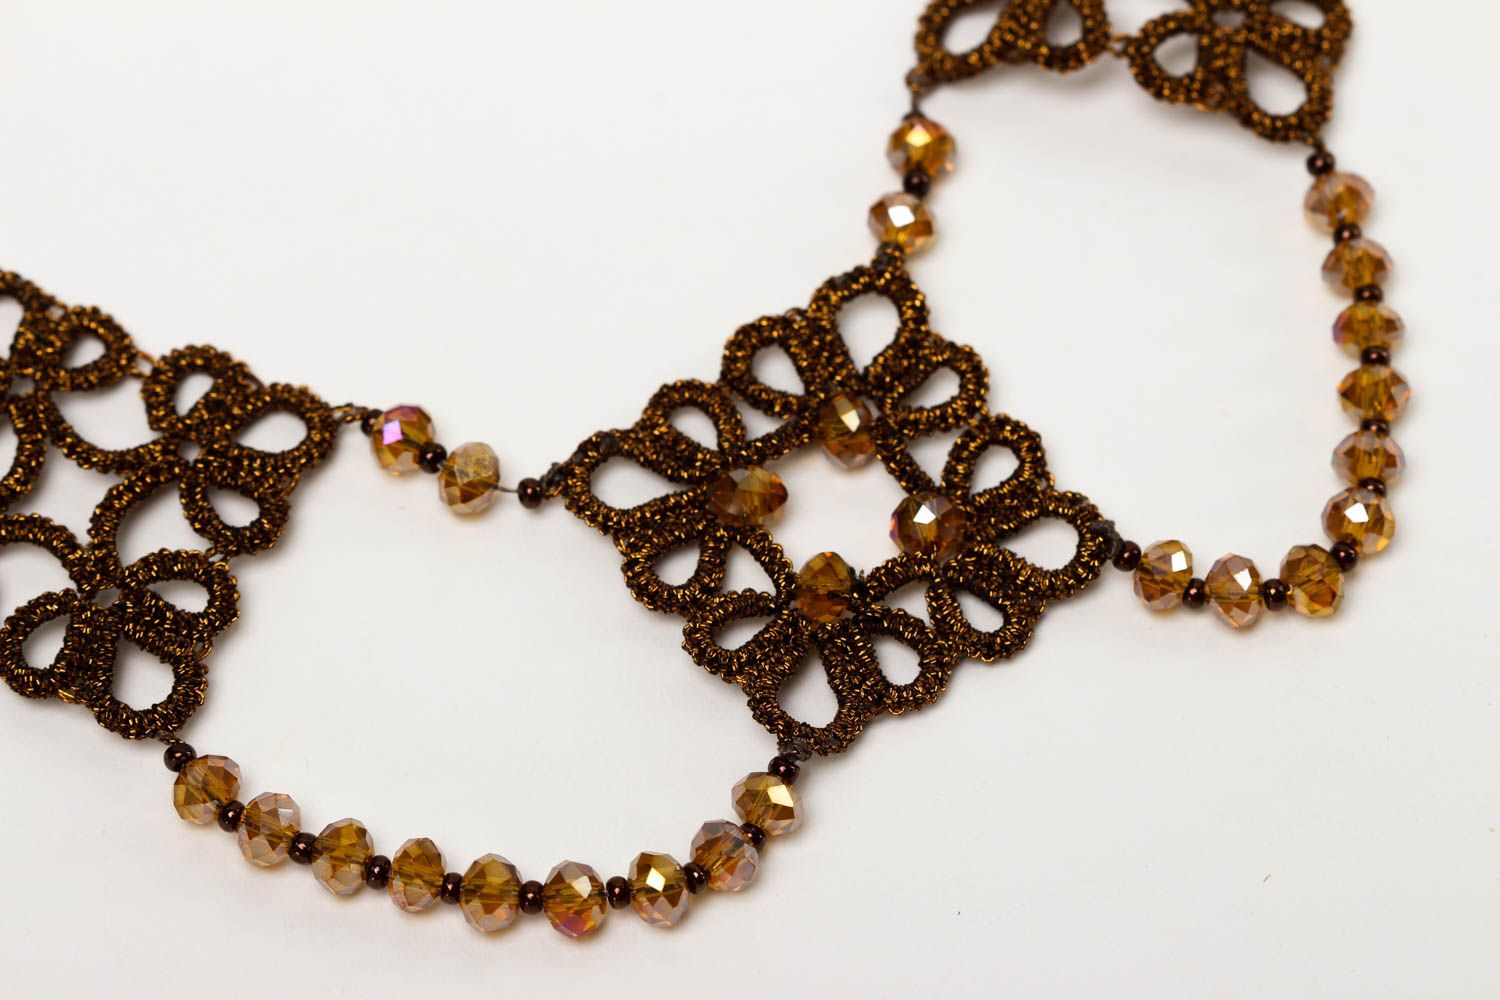 Unusual handmade textile necklace artisan jewelry designs neck accessories photo 3